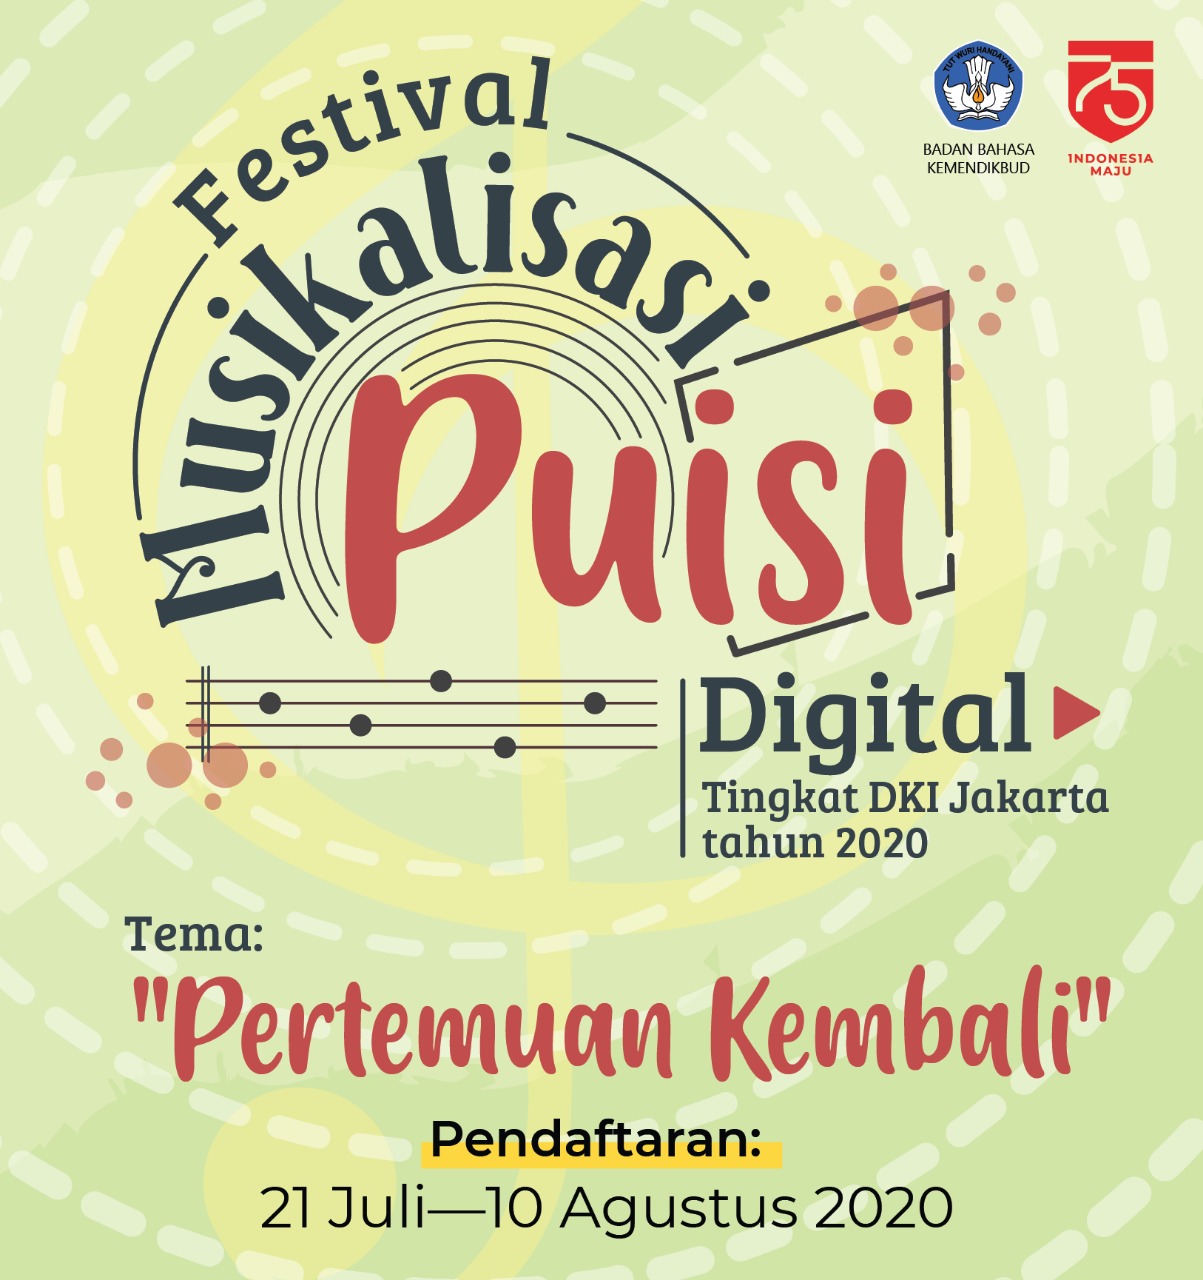 Festival Musikalisasi Puisi Digital Tingkat DKI Jakarta Tahun 2020